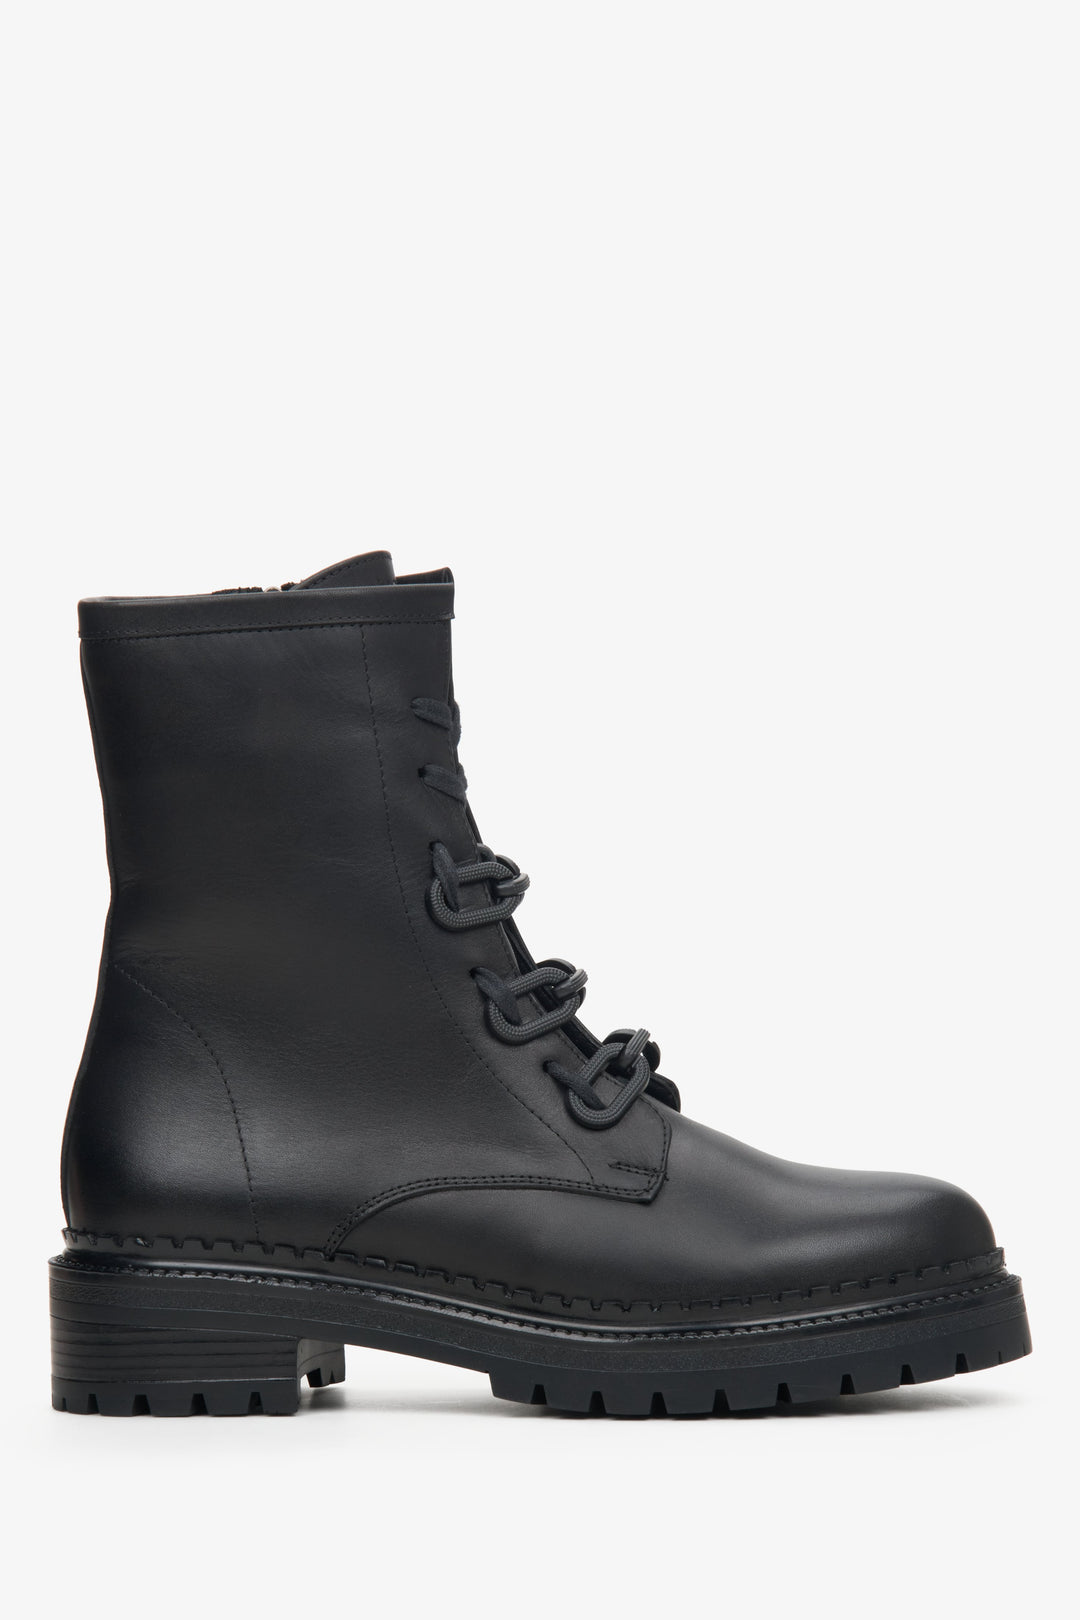 Women's ankle boots in black Estro - shoe profile.